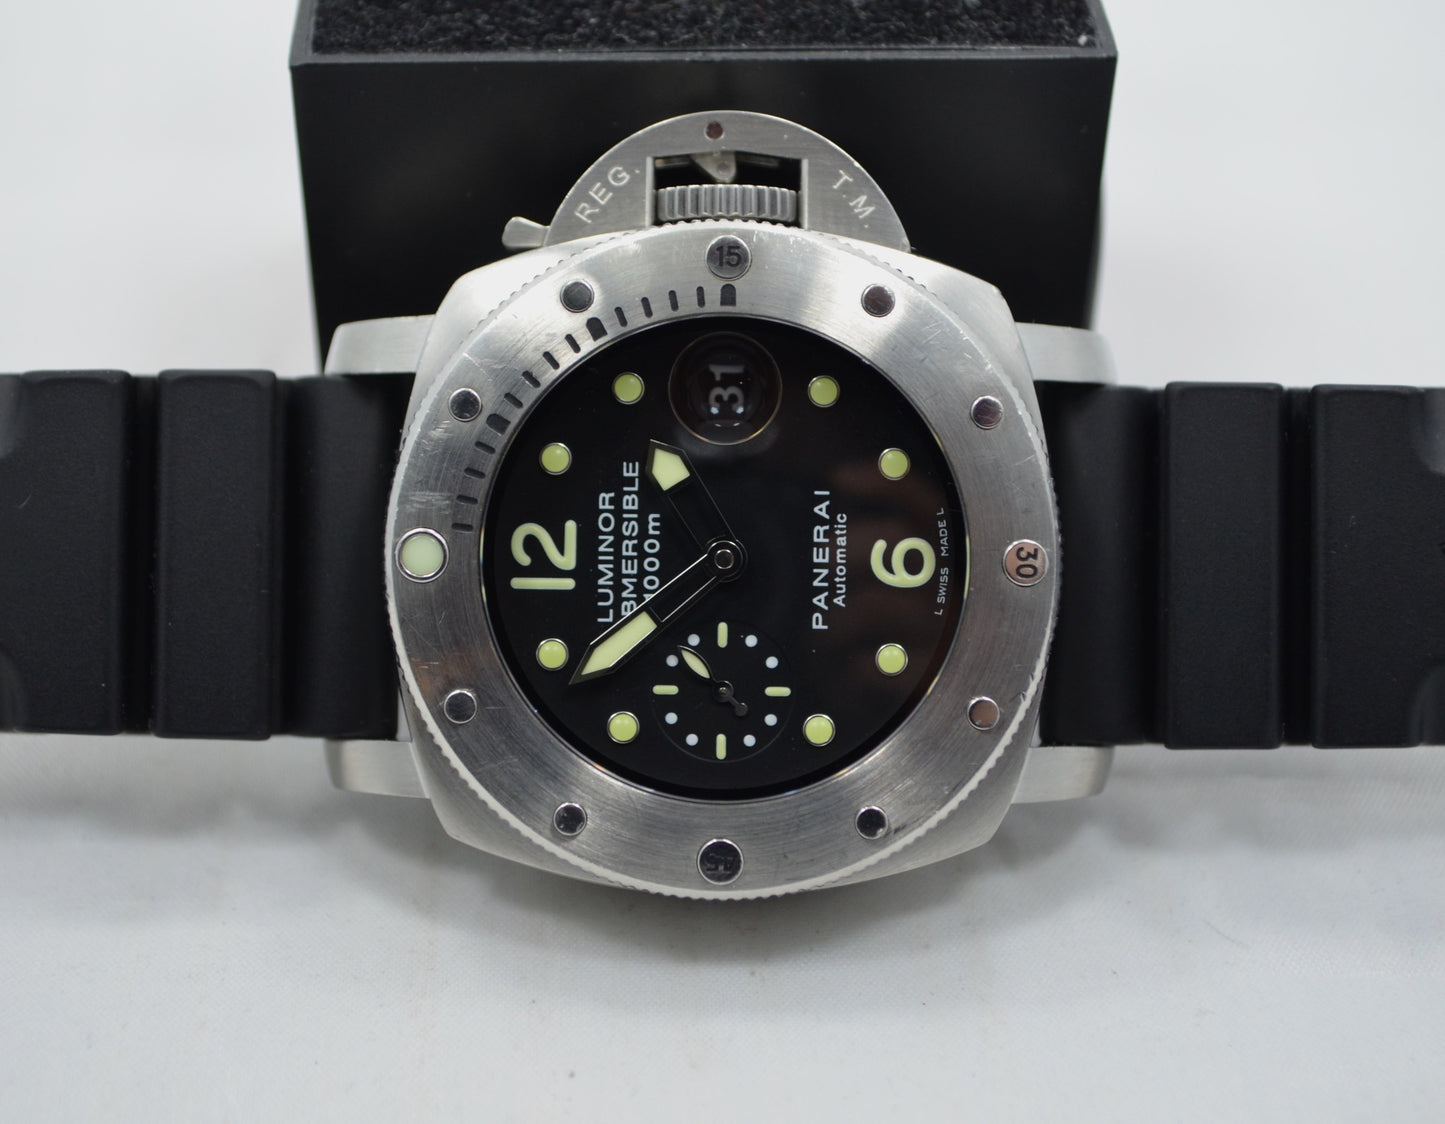 Panerai Luminor Submersible 1000 PAM 243 "K" Steel Auto Wristwatch Box Papers - Hashtag Watch Company